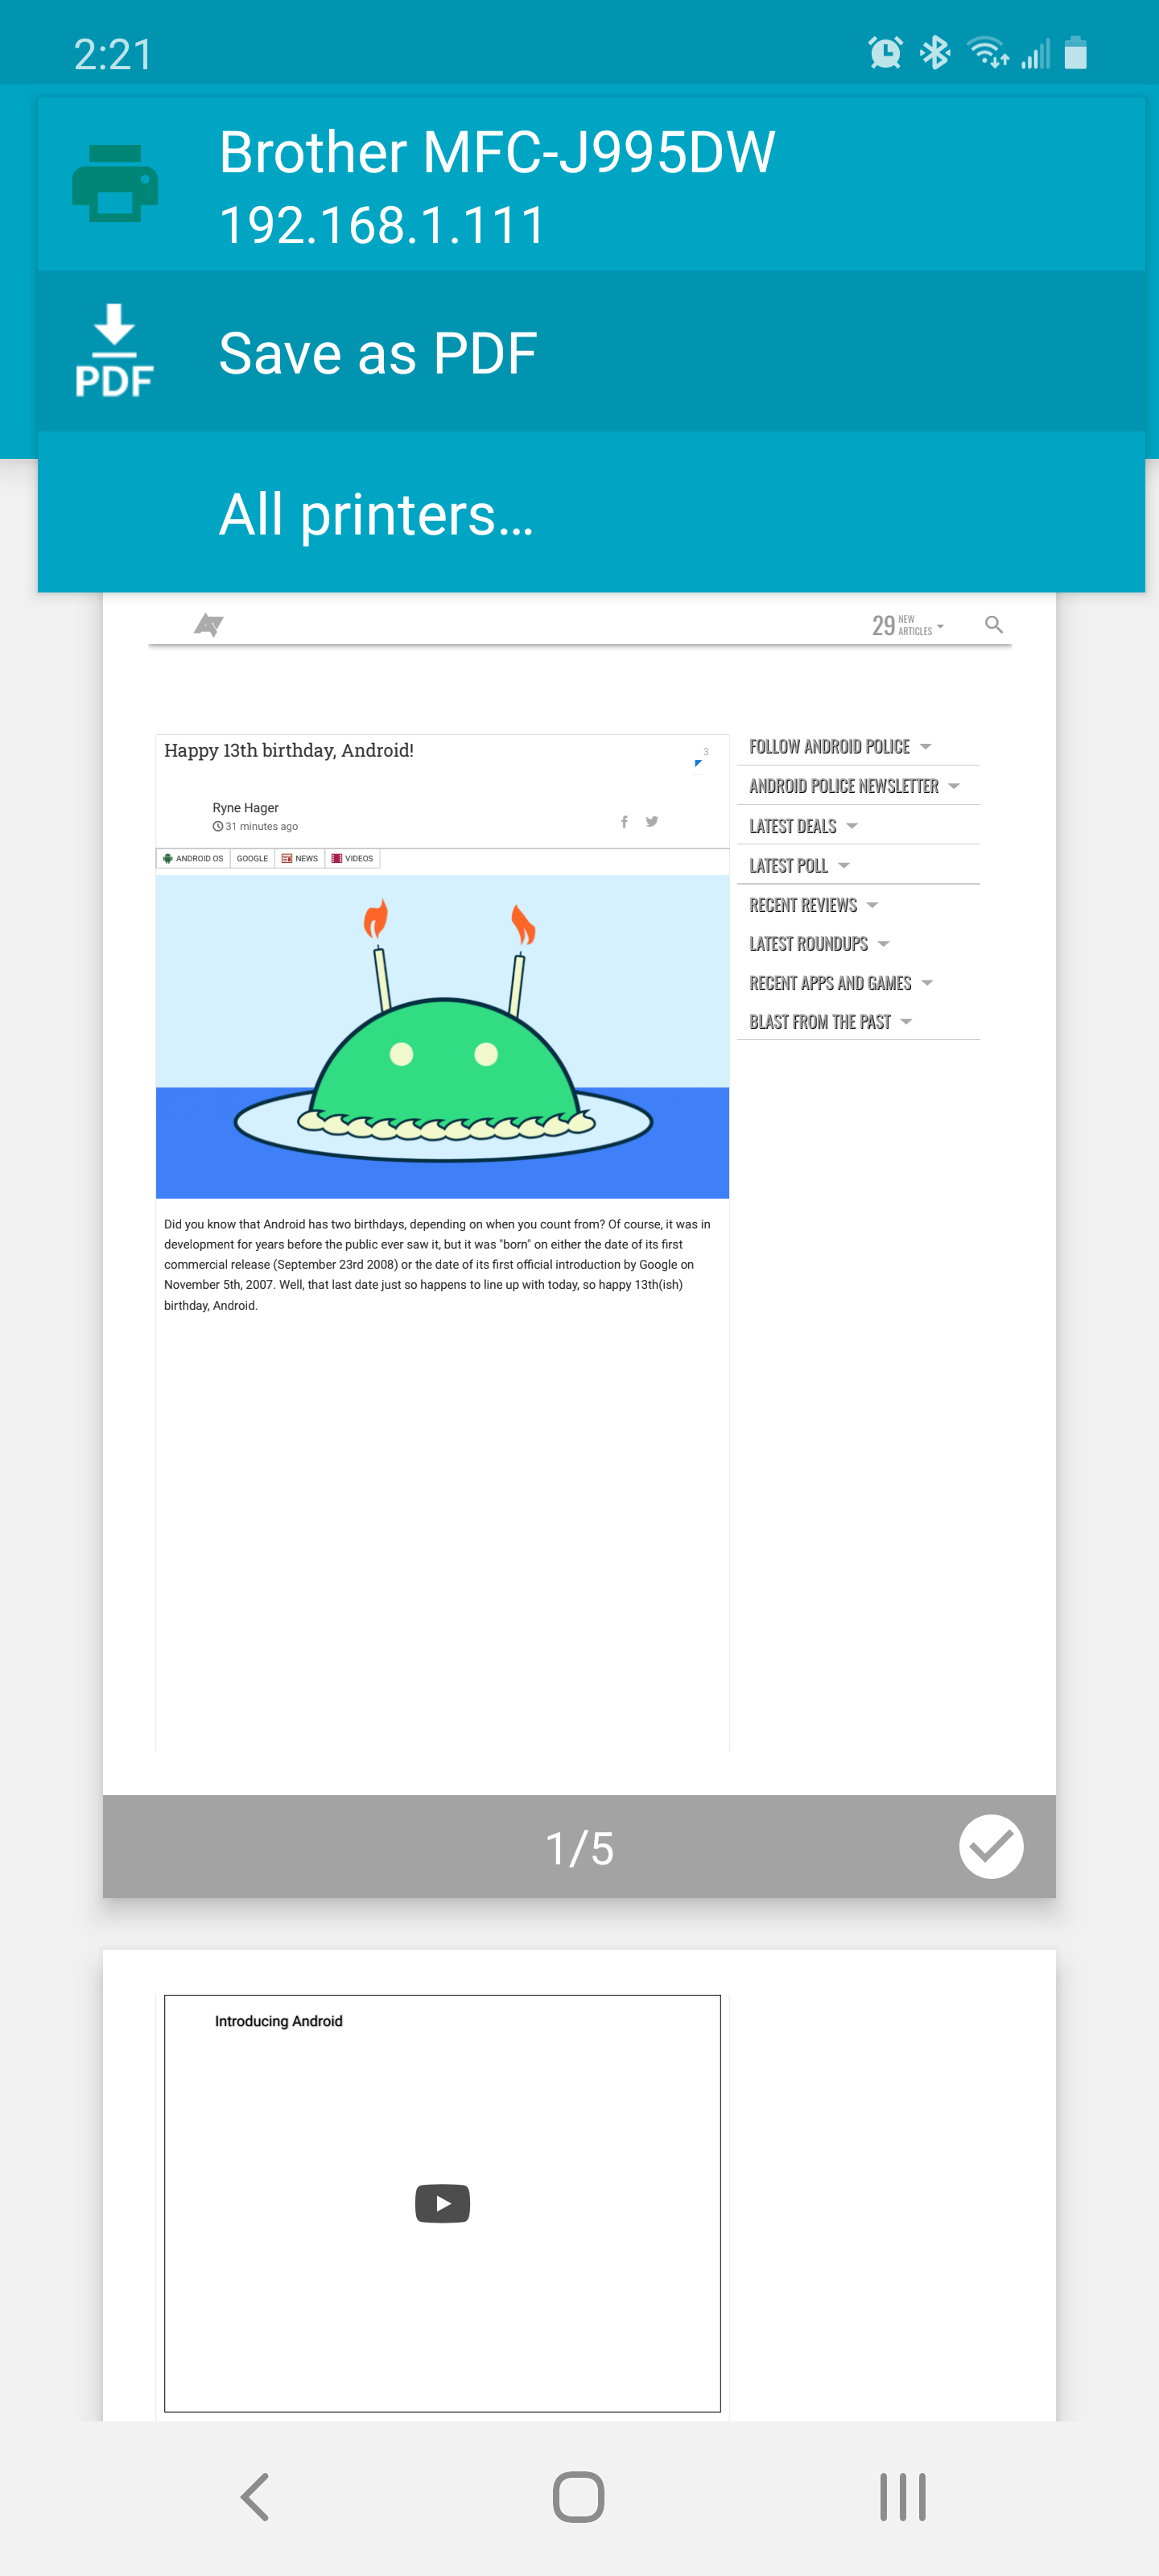 The print menu in the Chrome mobile app